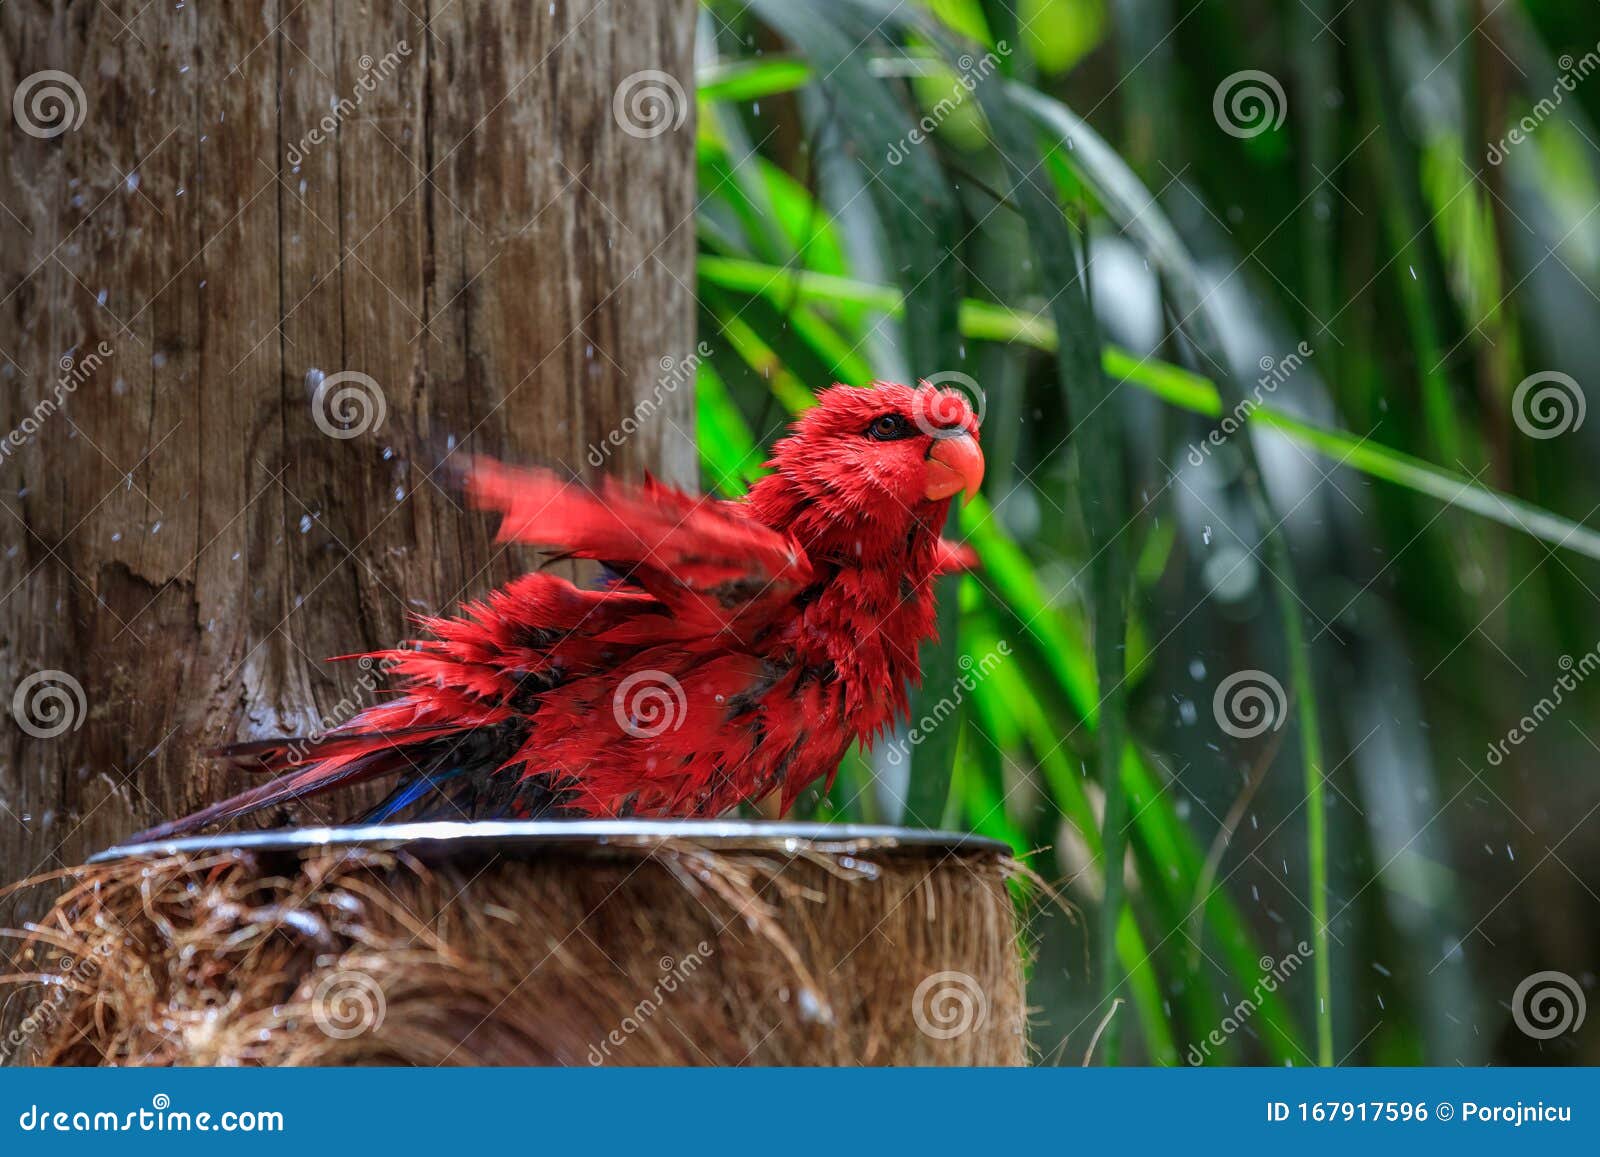 colorful parrot in loro park in tenerife, spain